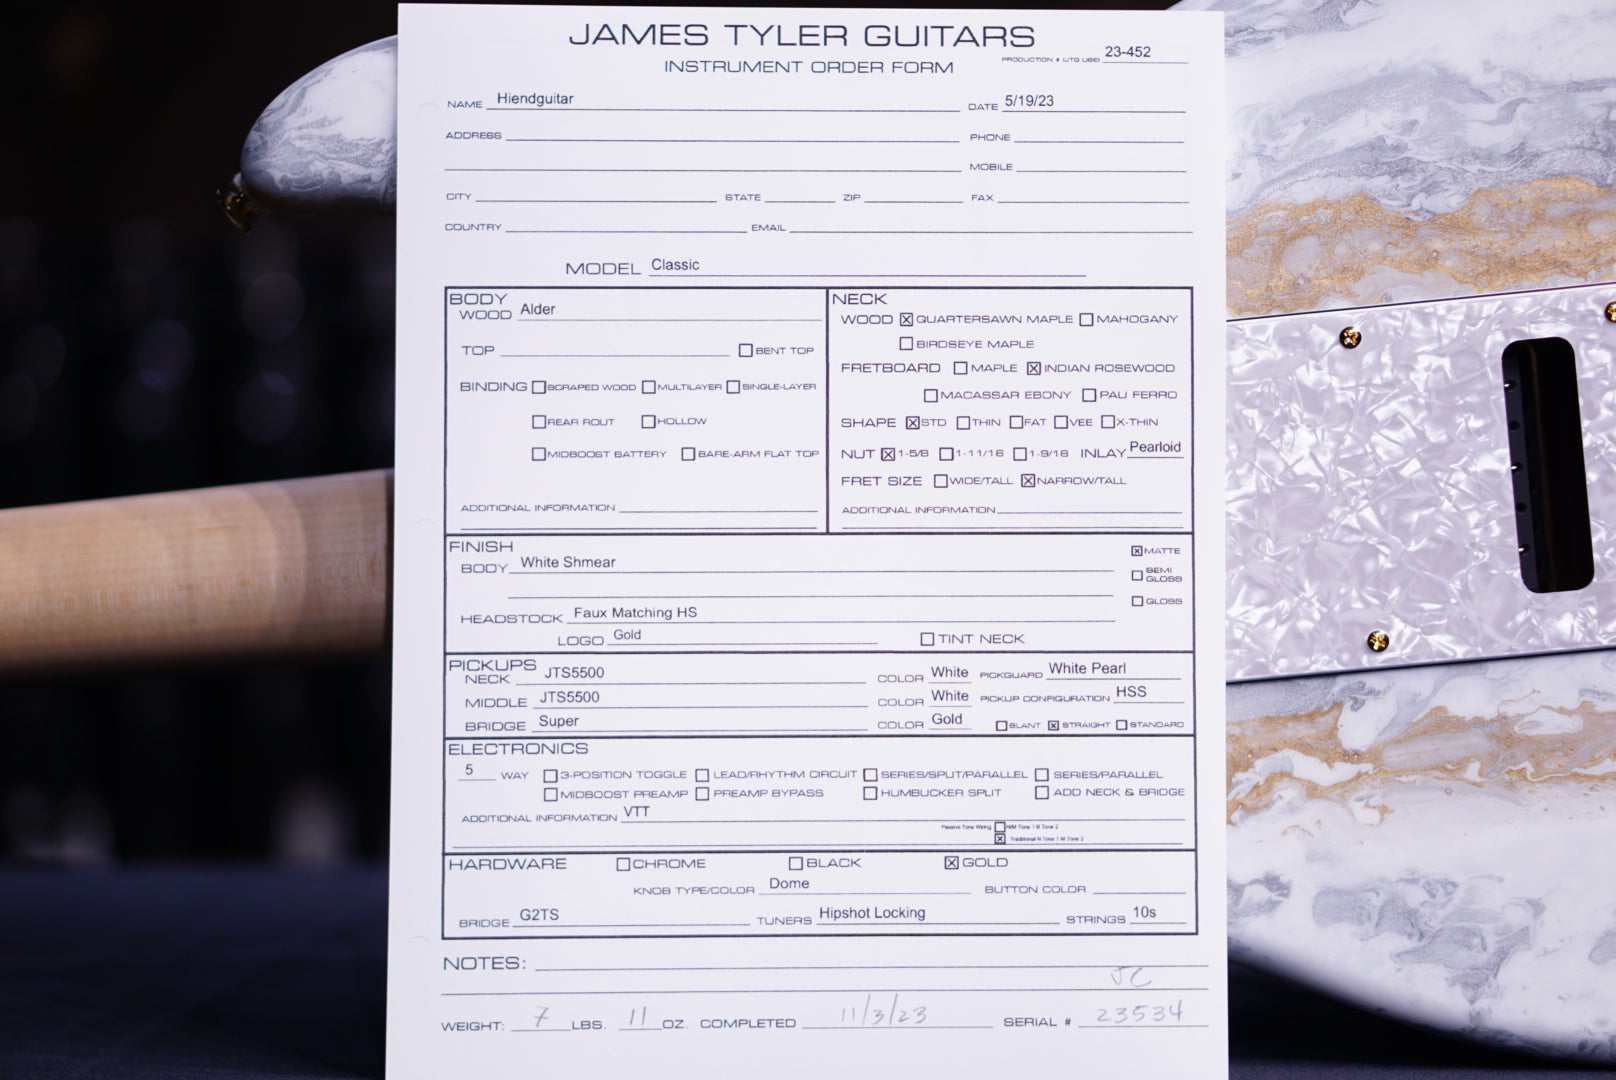 James Tyler Classic white shmear 23534 - HIENDGUITAR   James Tyler GUITAR